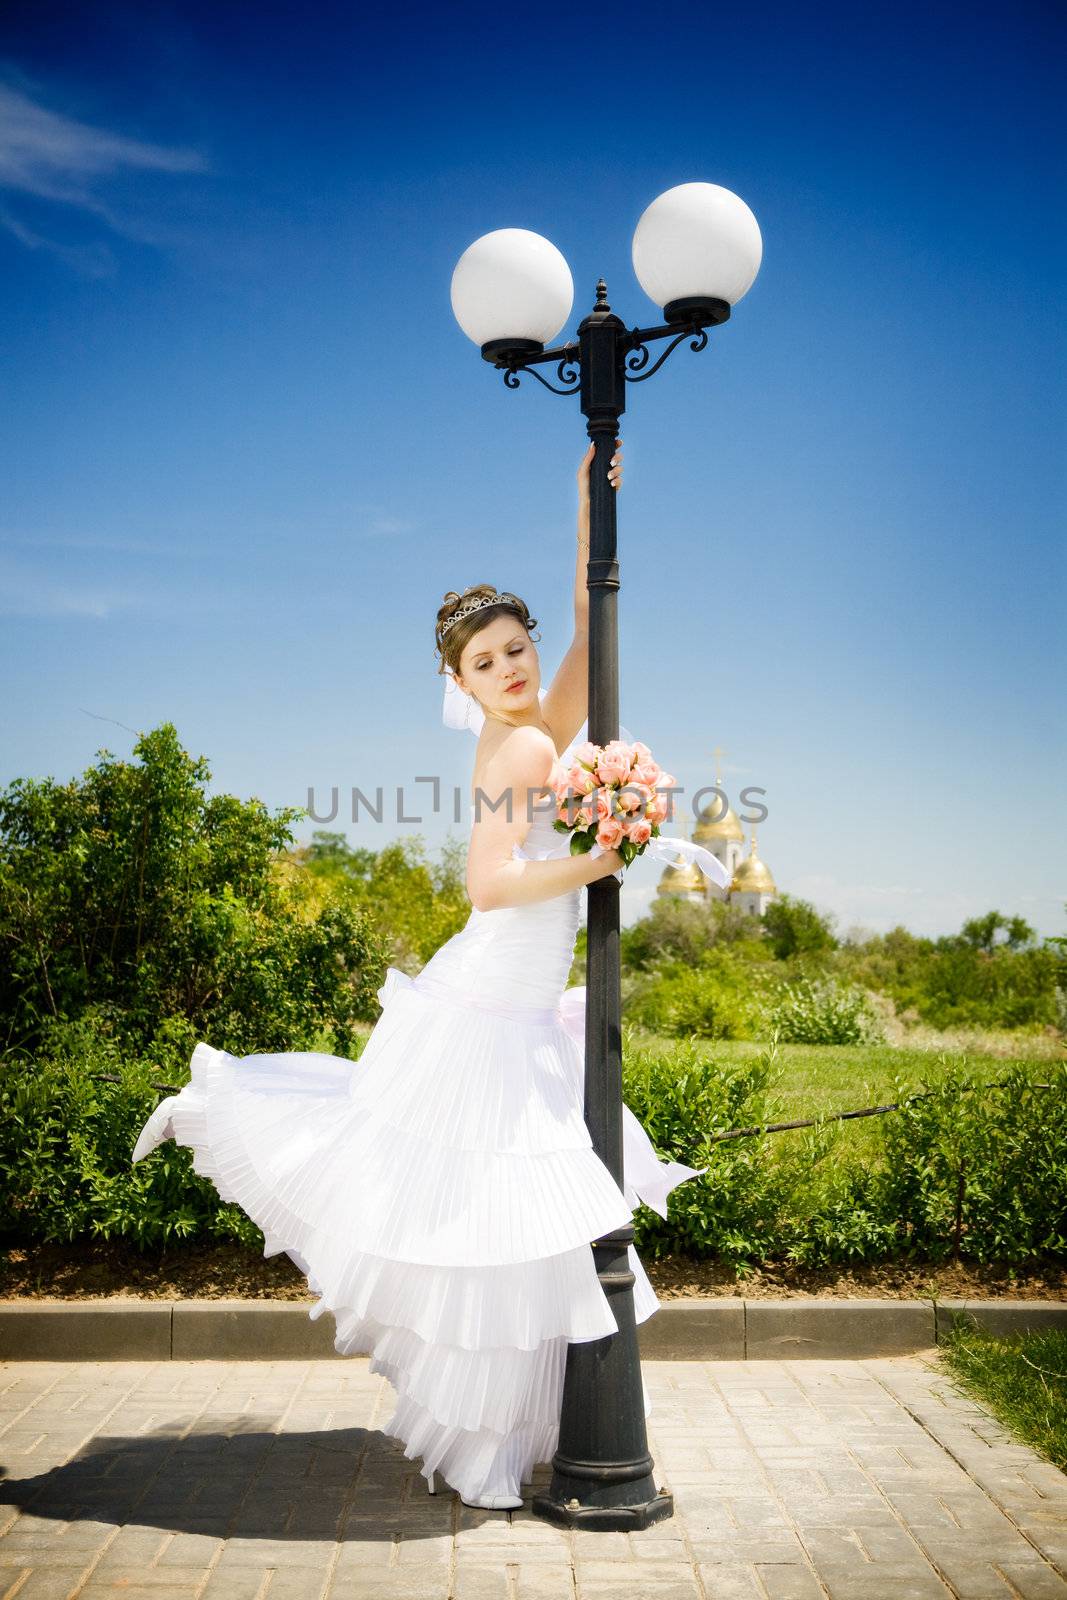 bride dance near the Street lantern